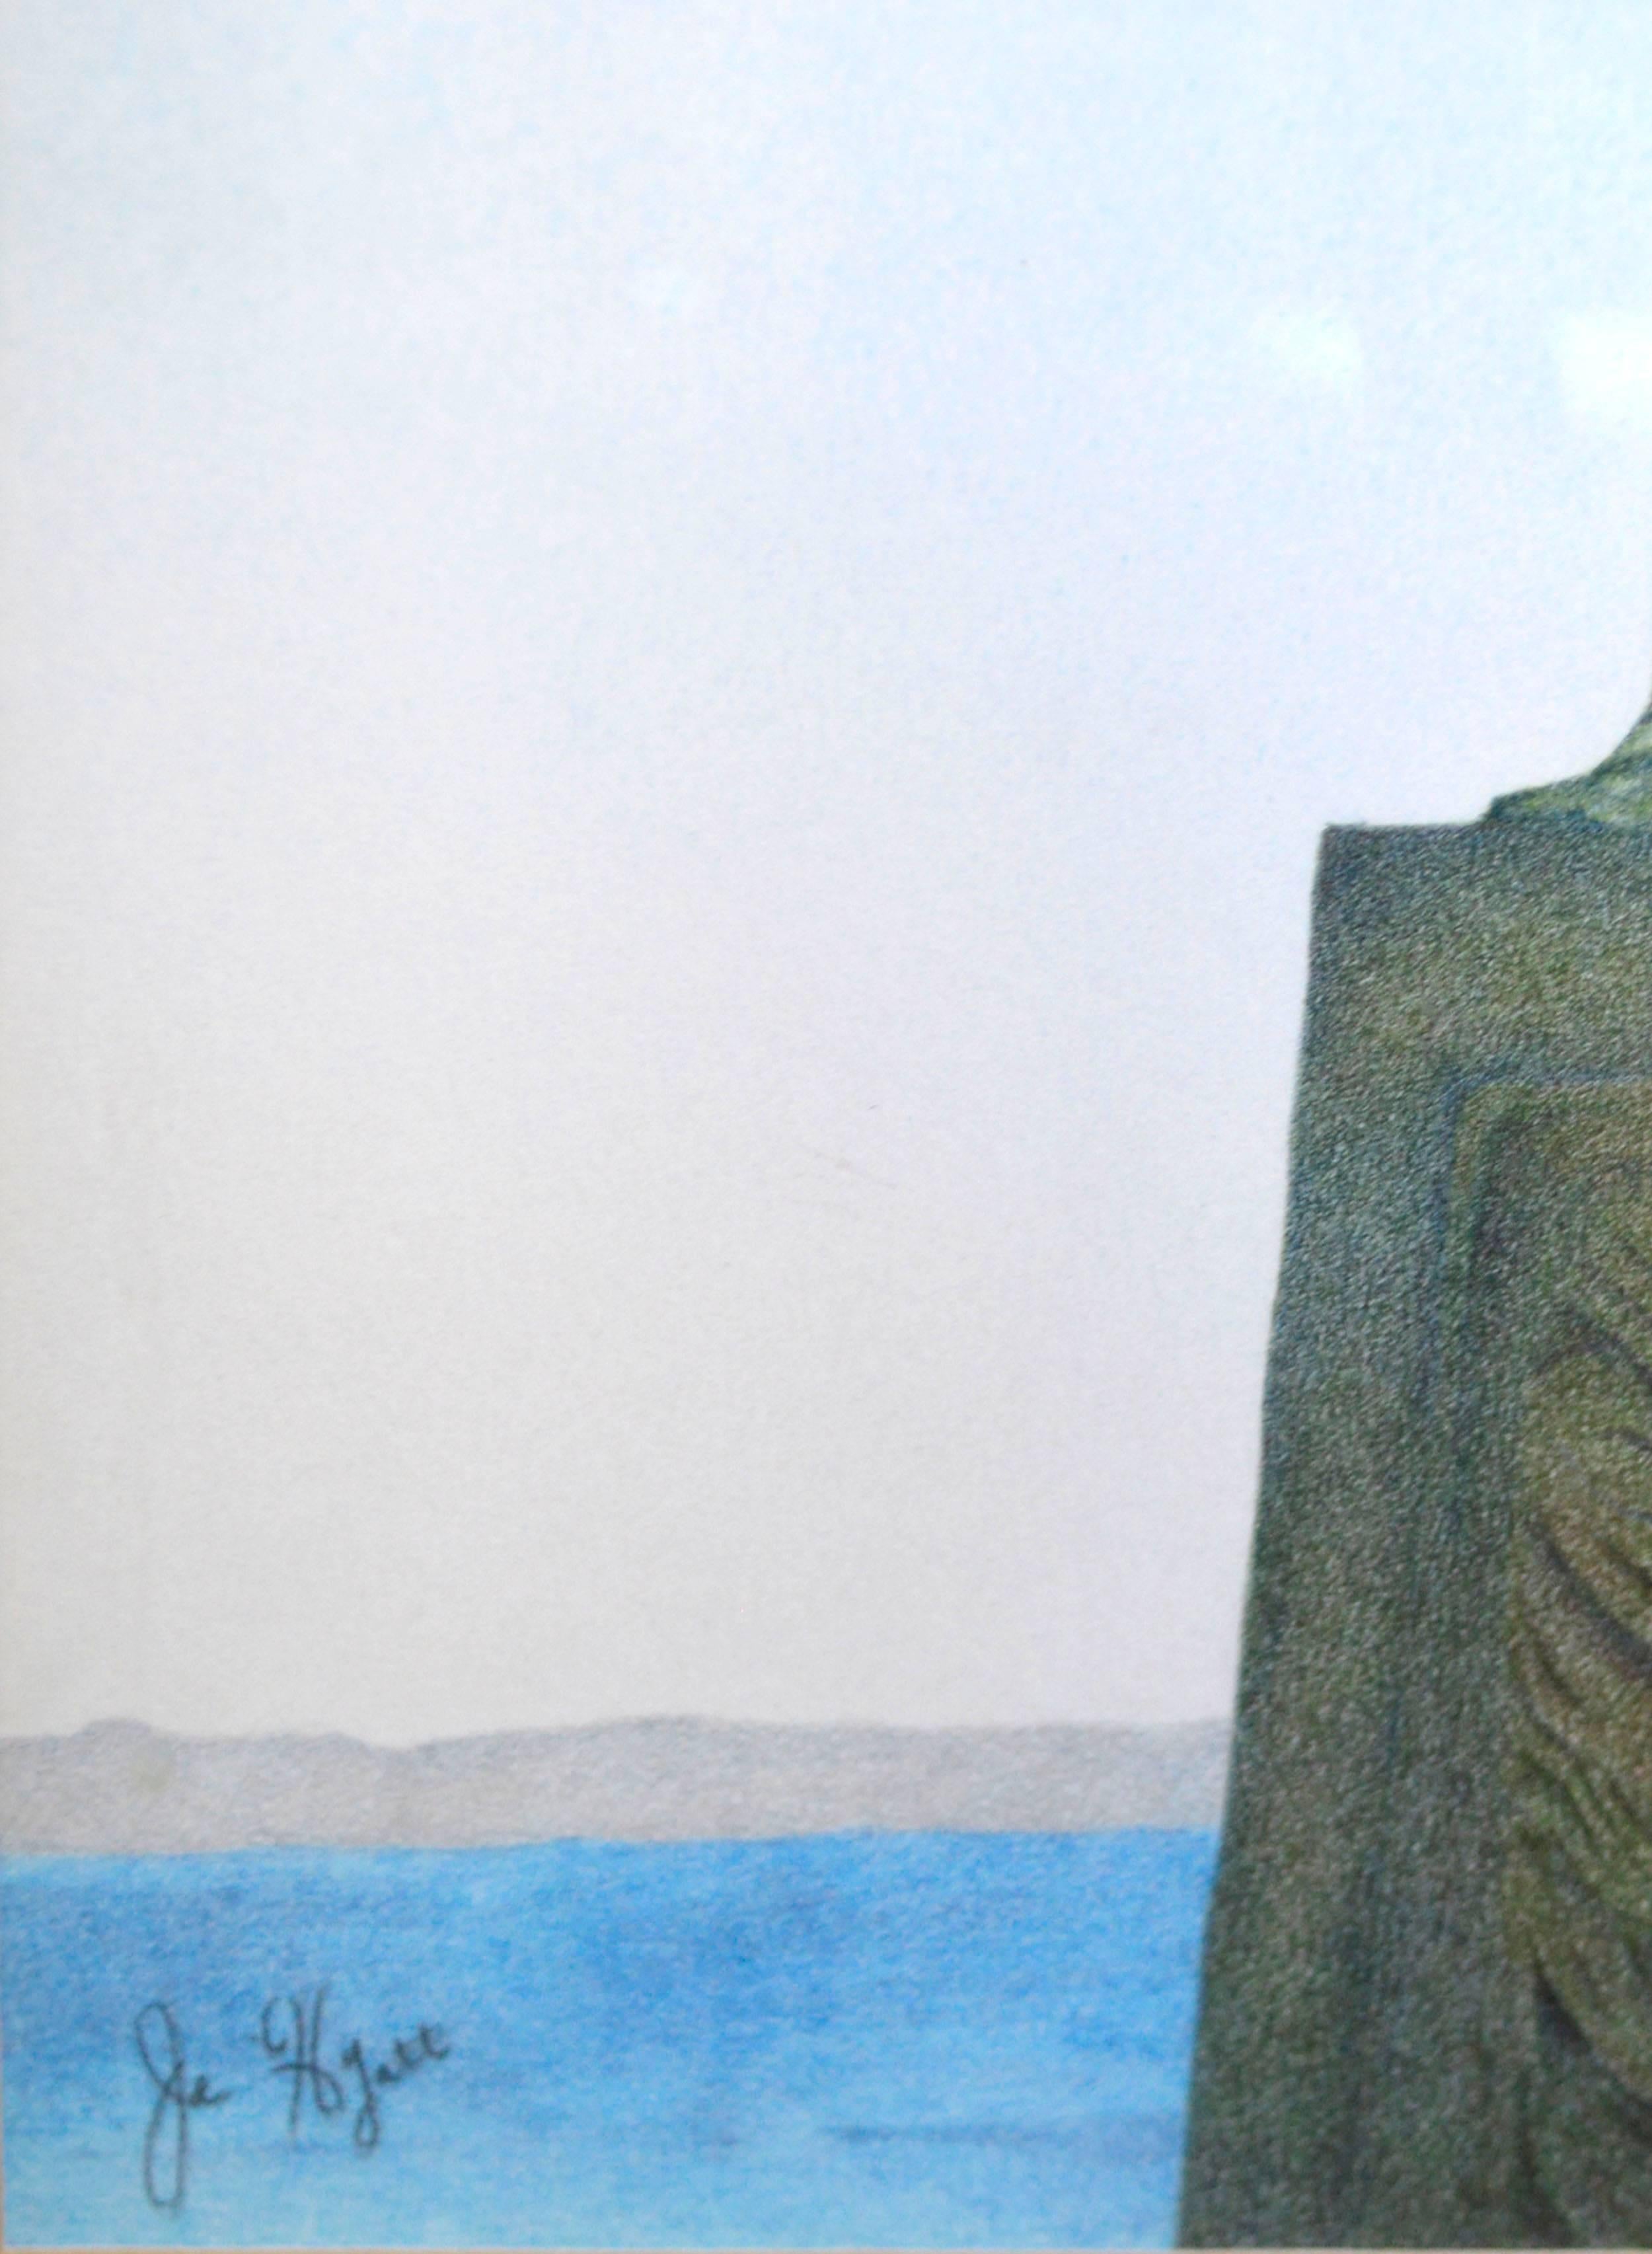 To Honor Surfing at Steamer Lane - Blue Figurative Painting by Joe Hyatt